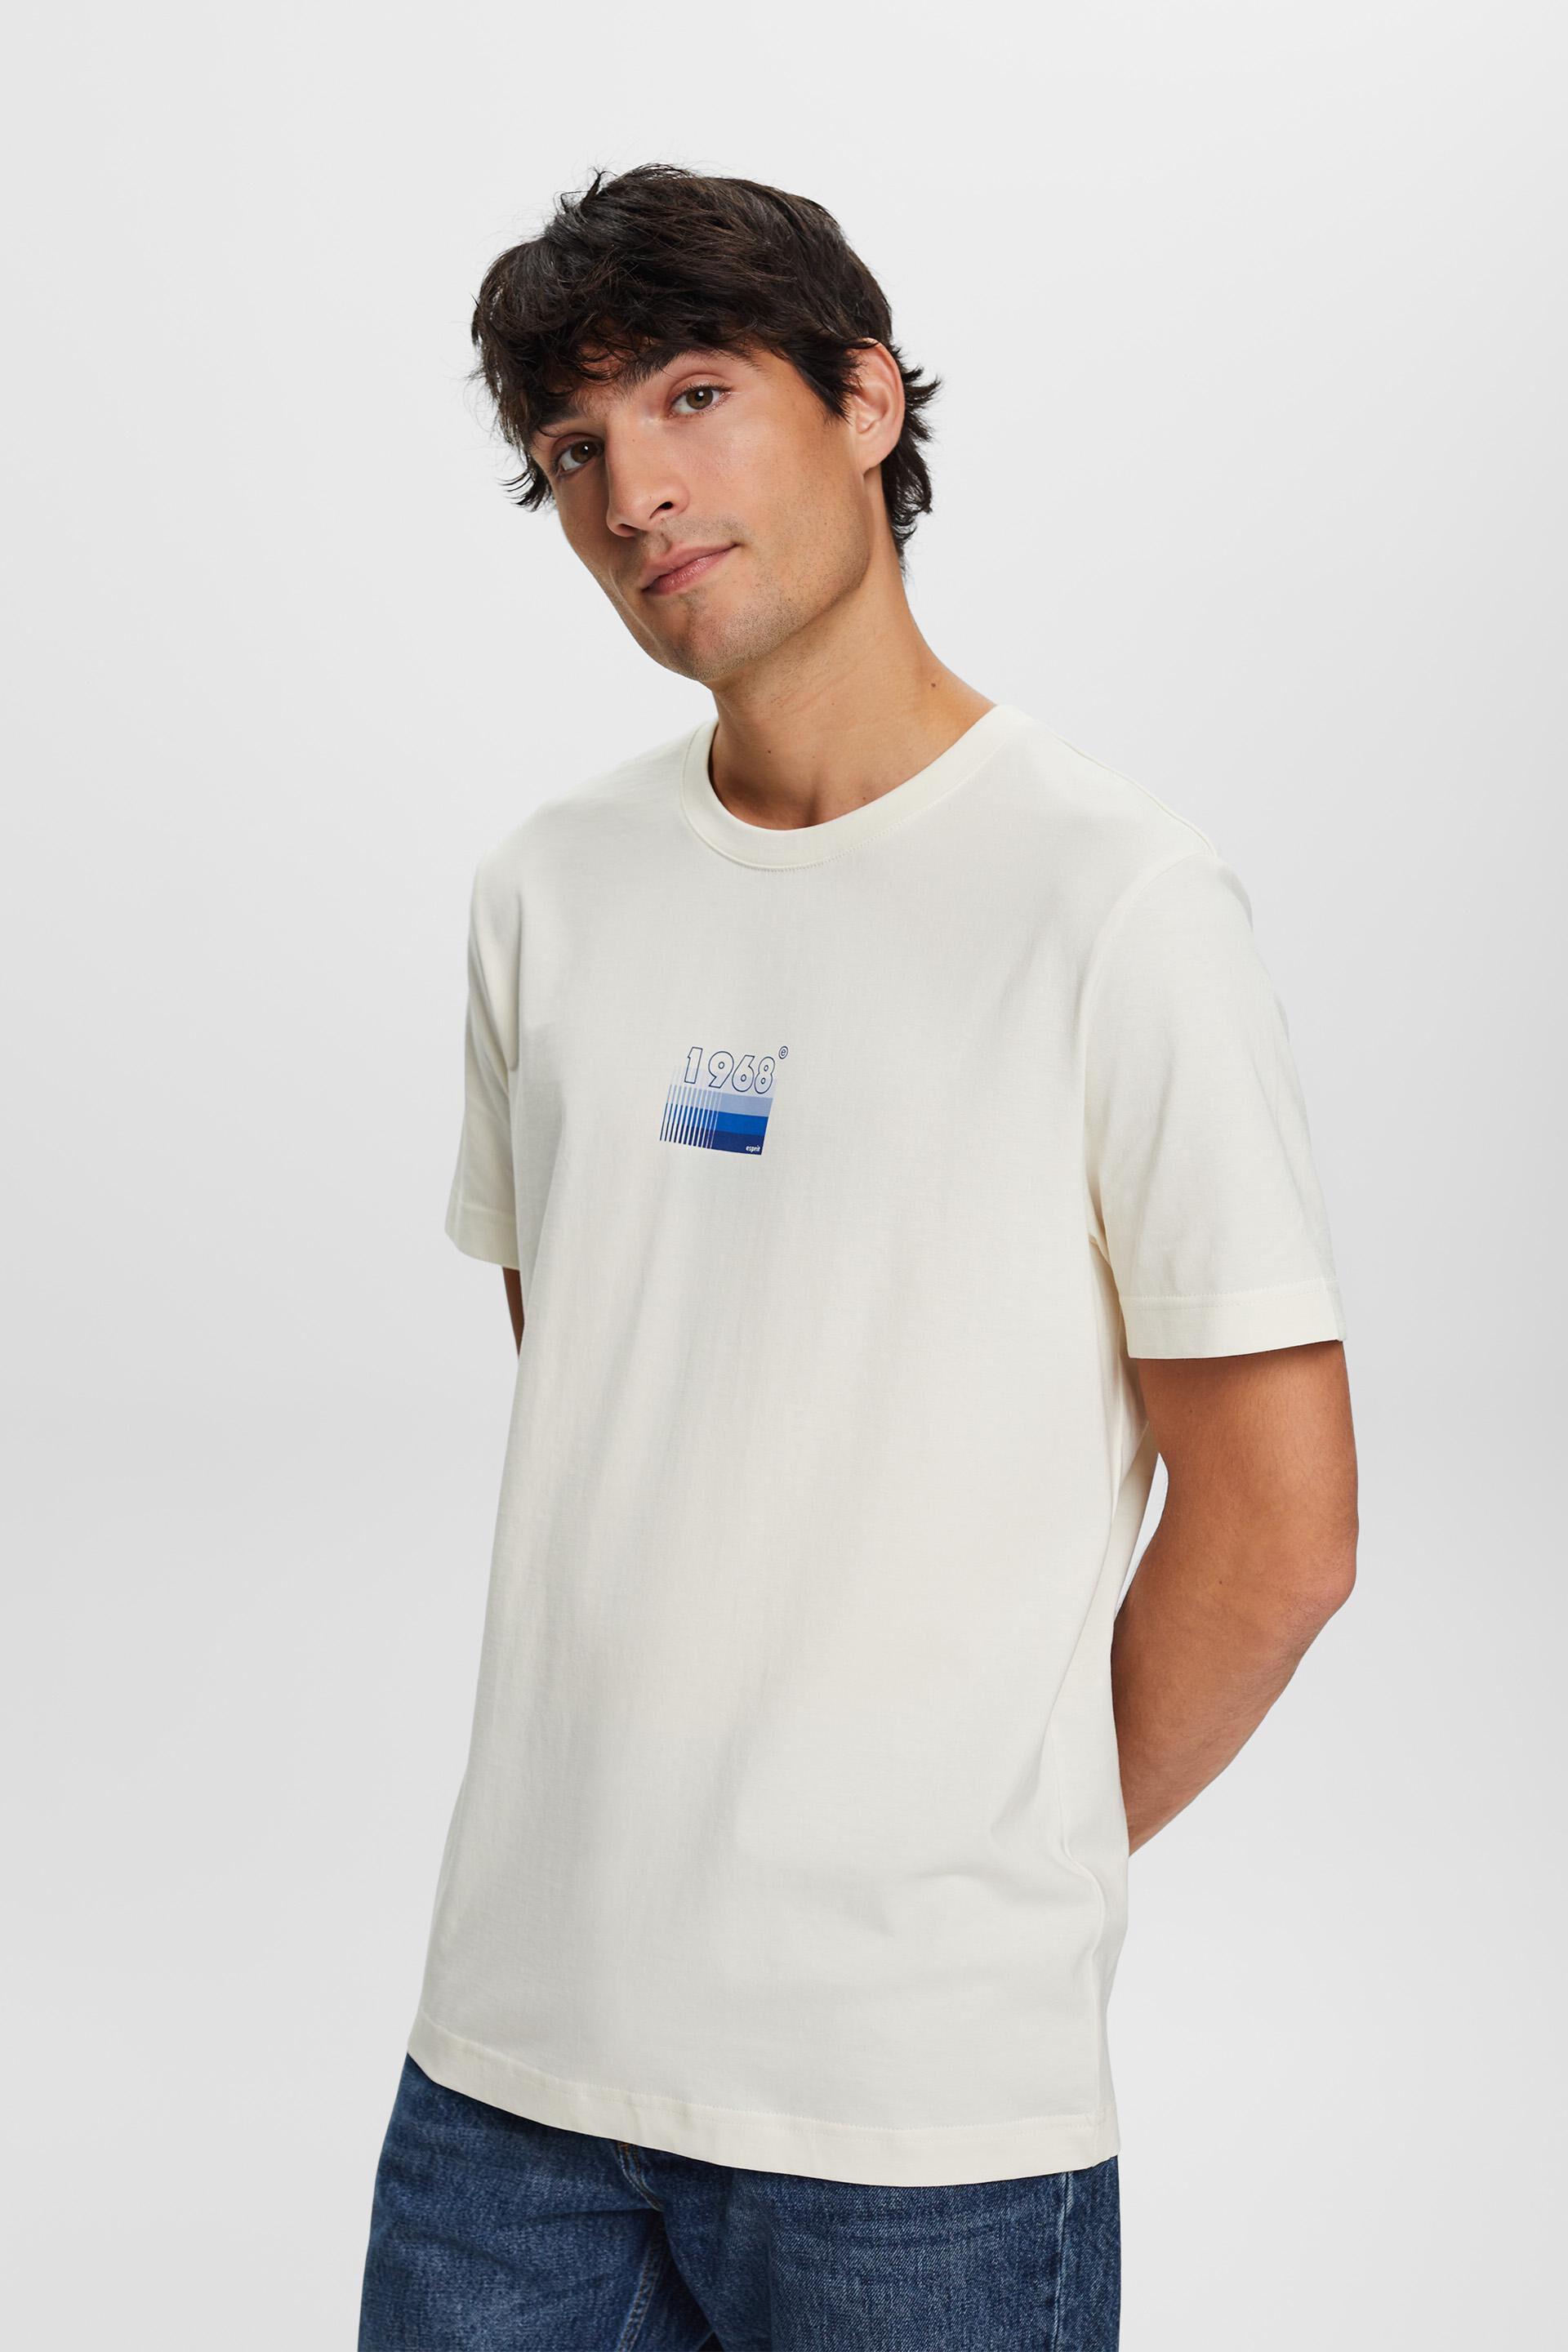 Esprit Jersey cotton T-shirt print, 100% with